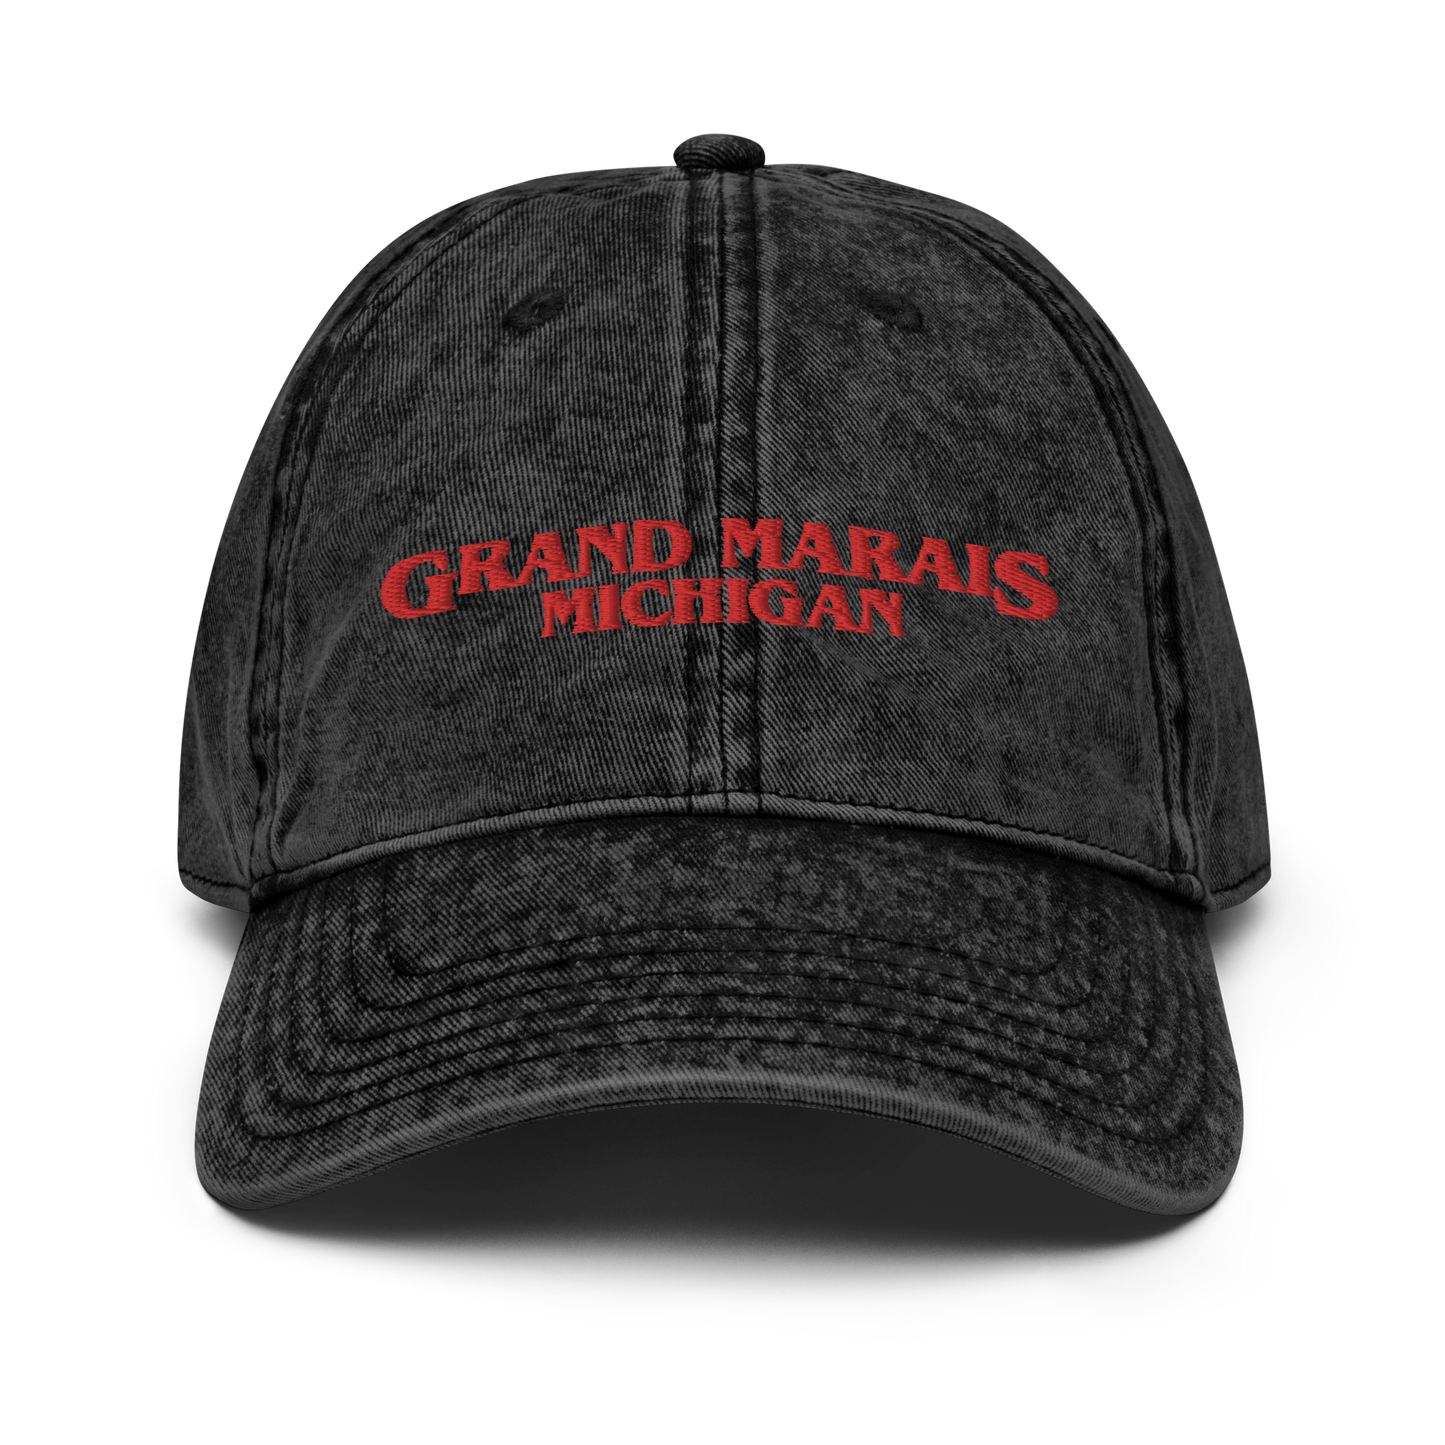 'Grand Marais Michigan' Vintage Baseball Caps (1980s Drama Parody)